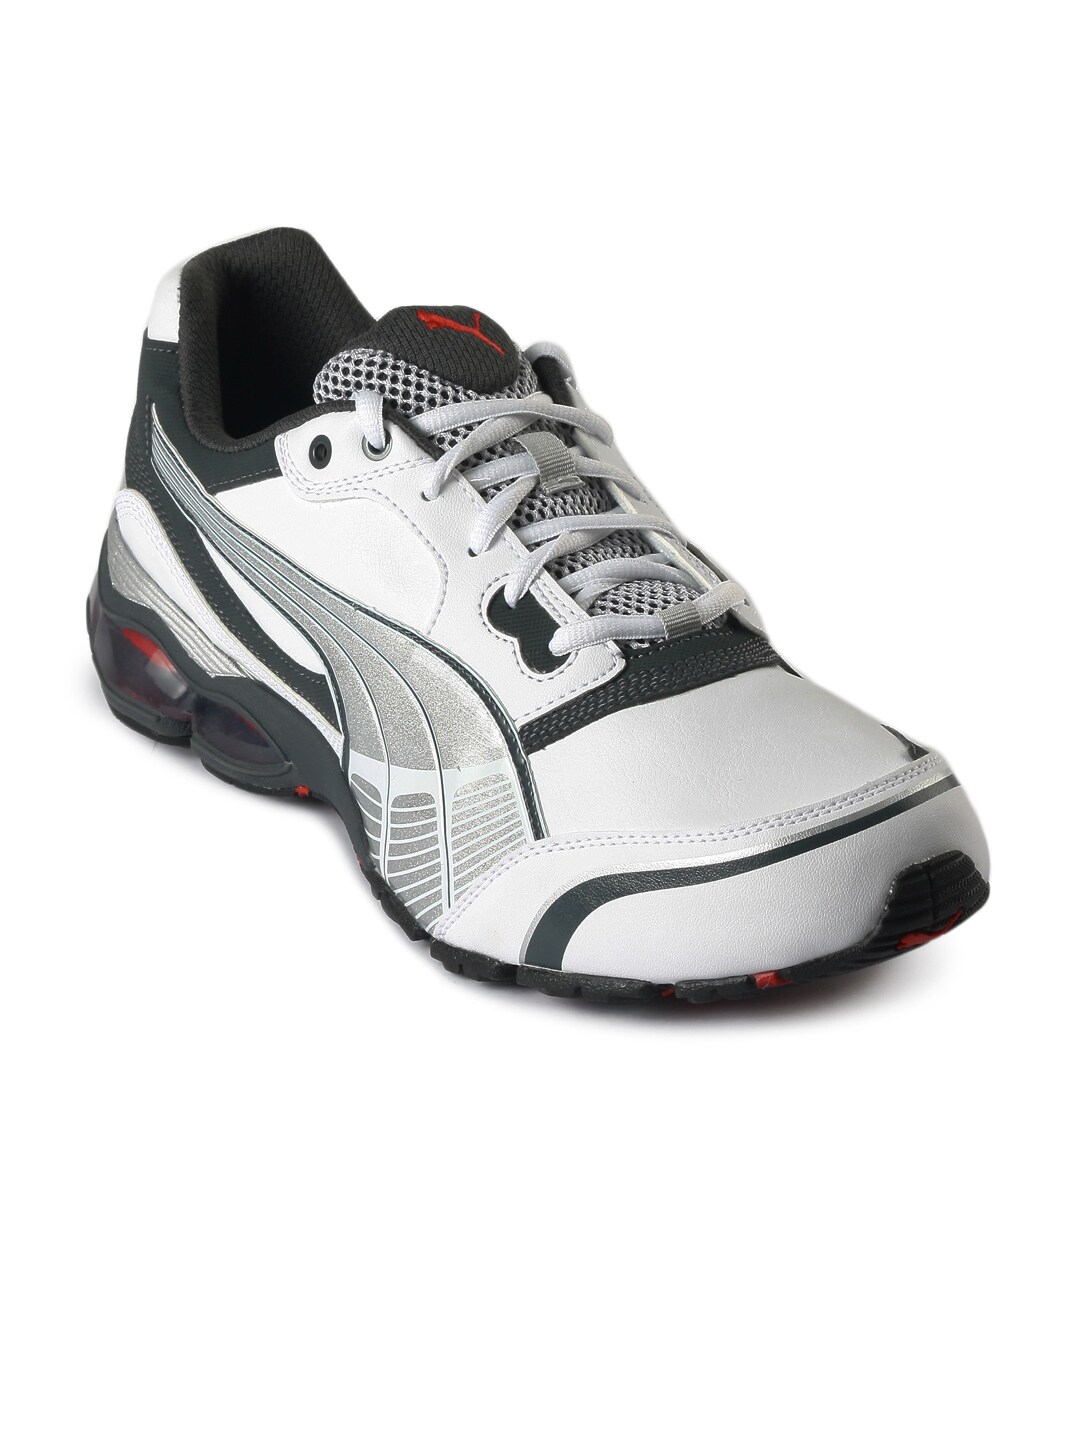 Puma Men Cell Varex White Sports Shoes